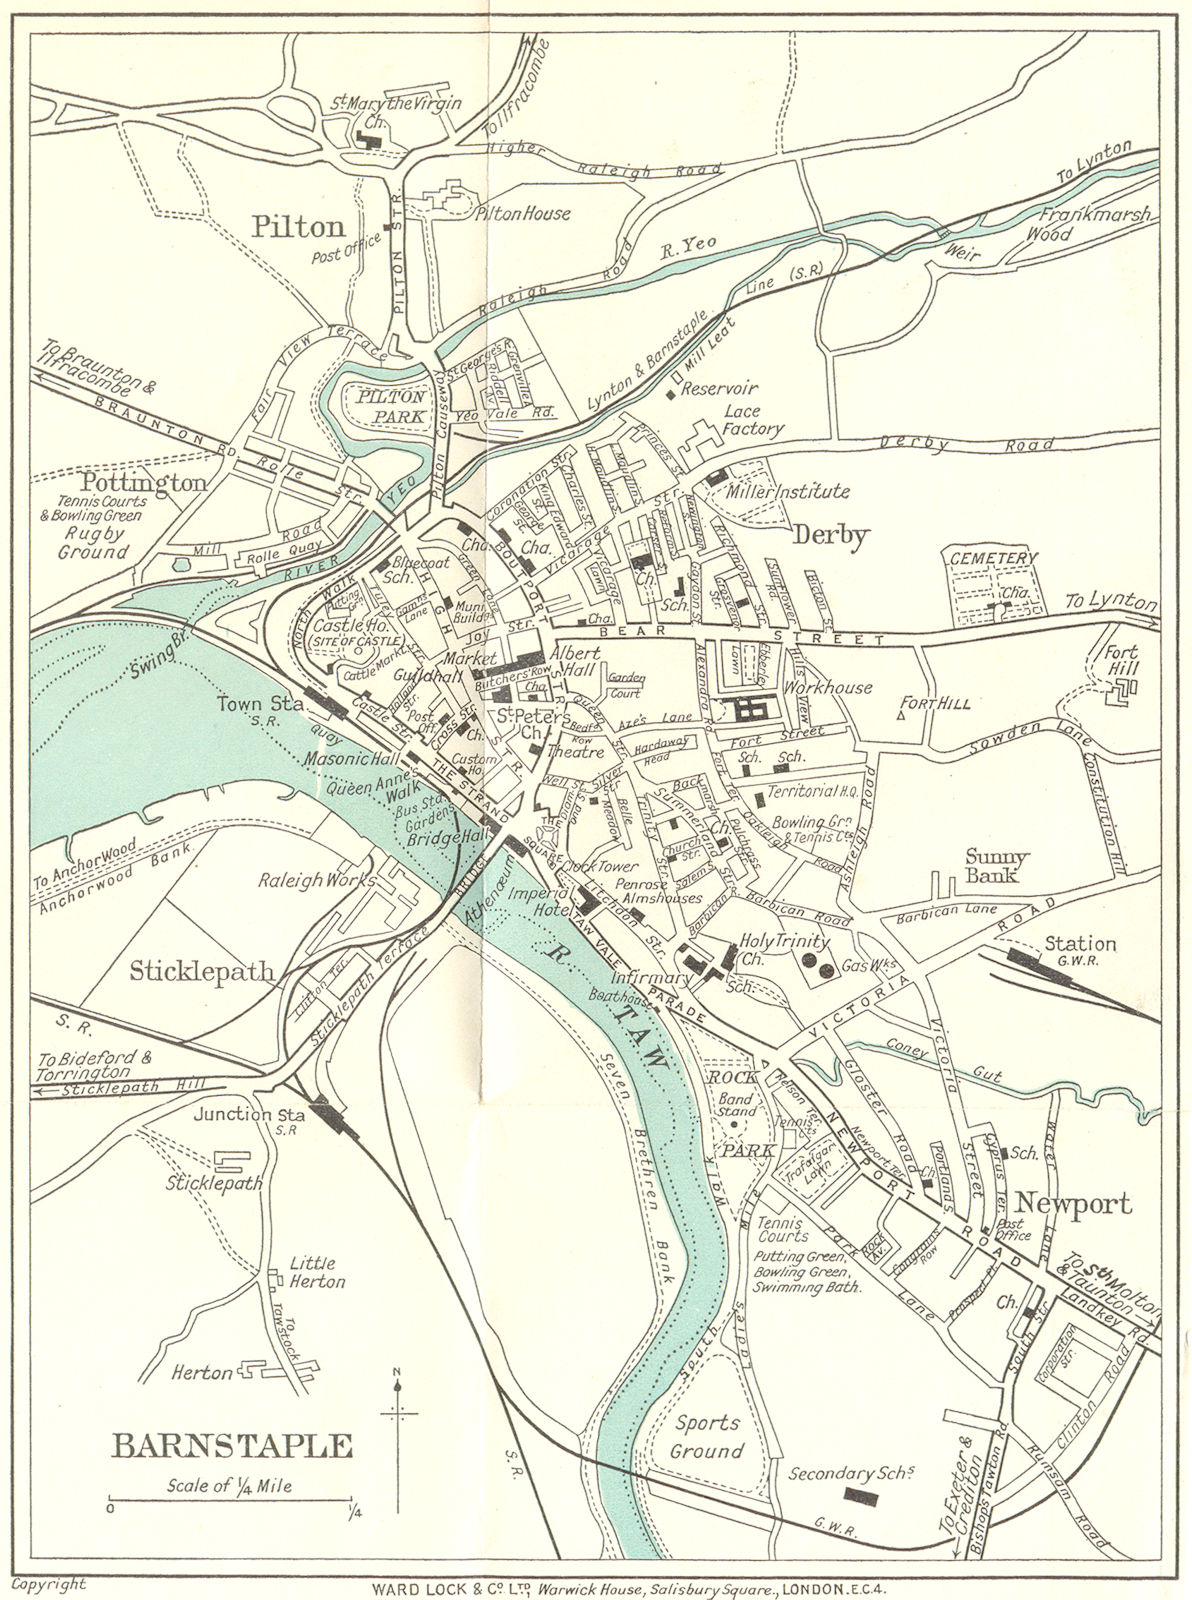 BARNSTAPLE vintage town/city plan. Devon. WARD LOCK 1934 old vintage map chart